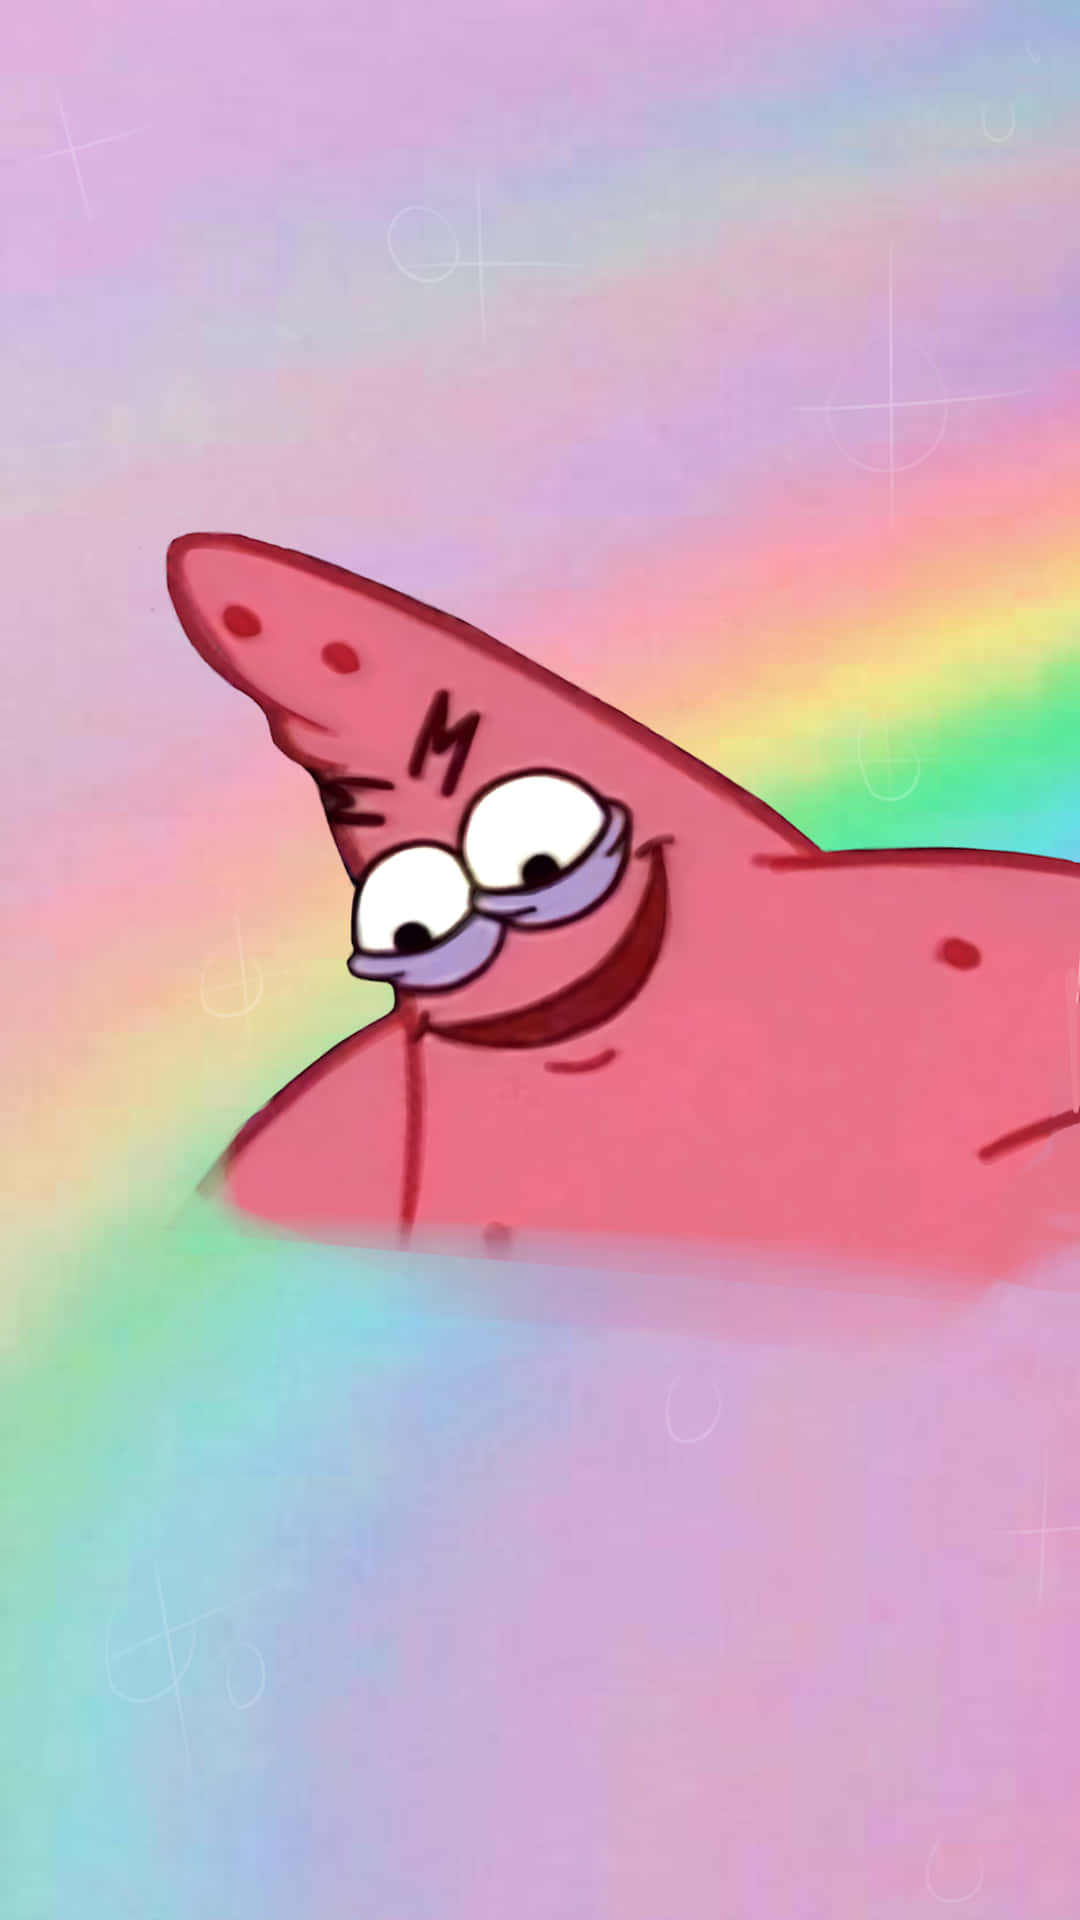 Happy-go-lucky Patrick Star From Spongebob Squarepants In Underwater Paradise